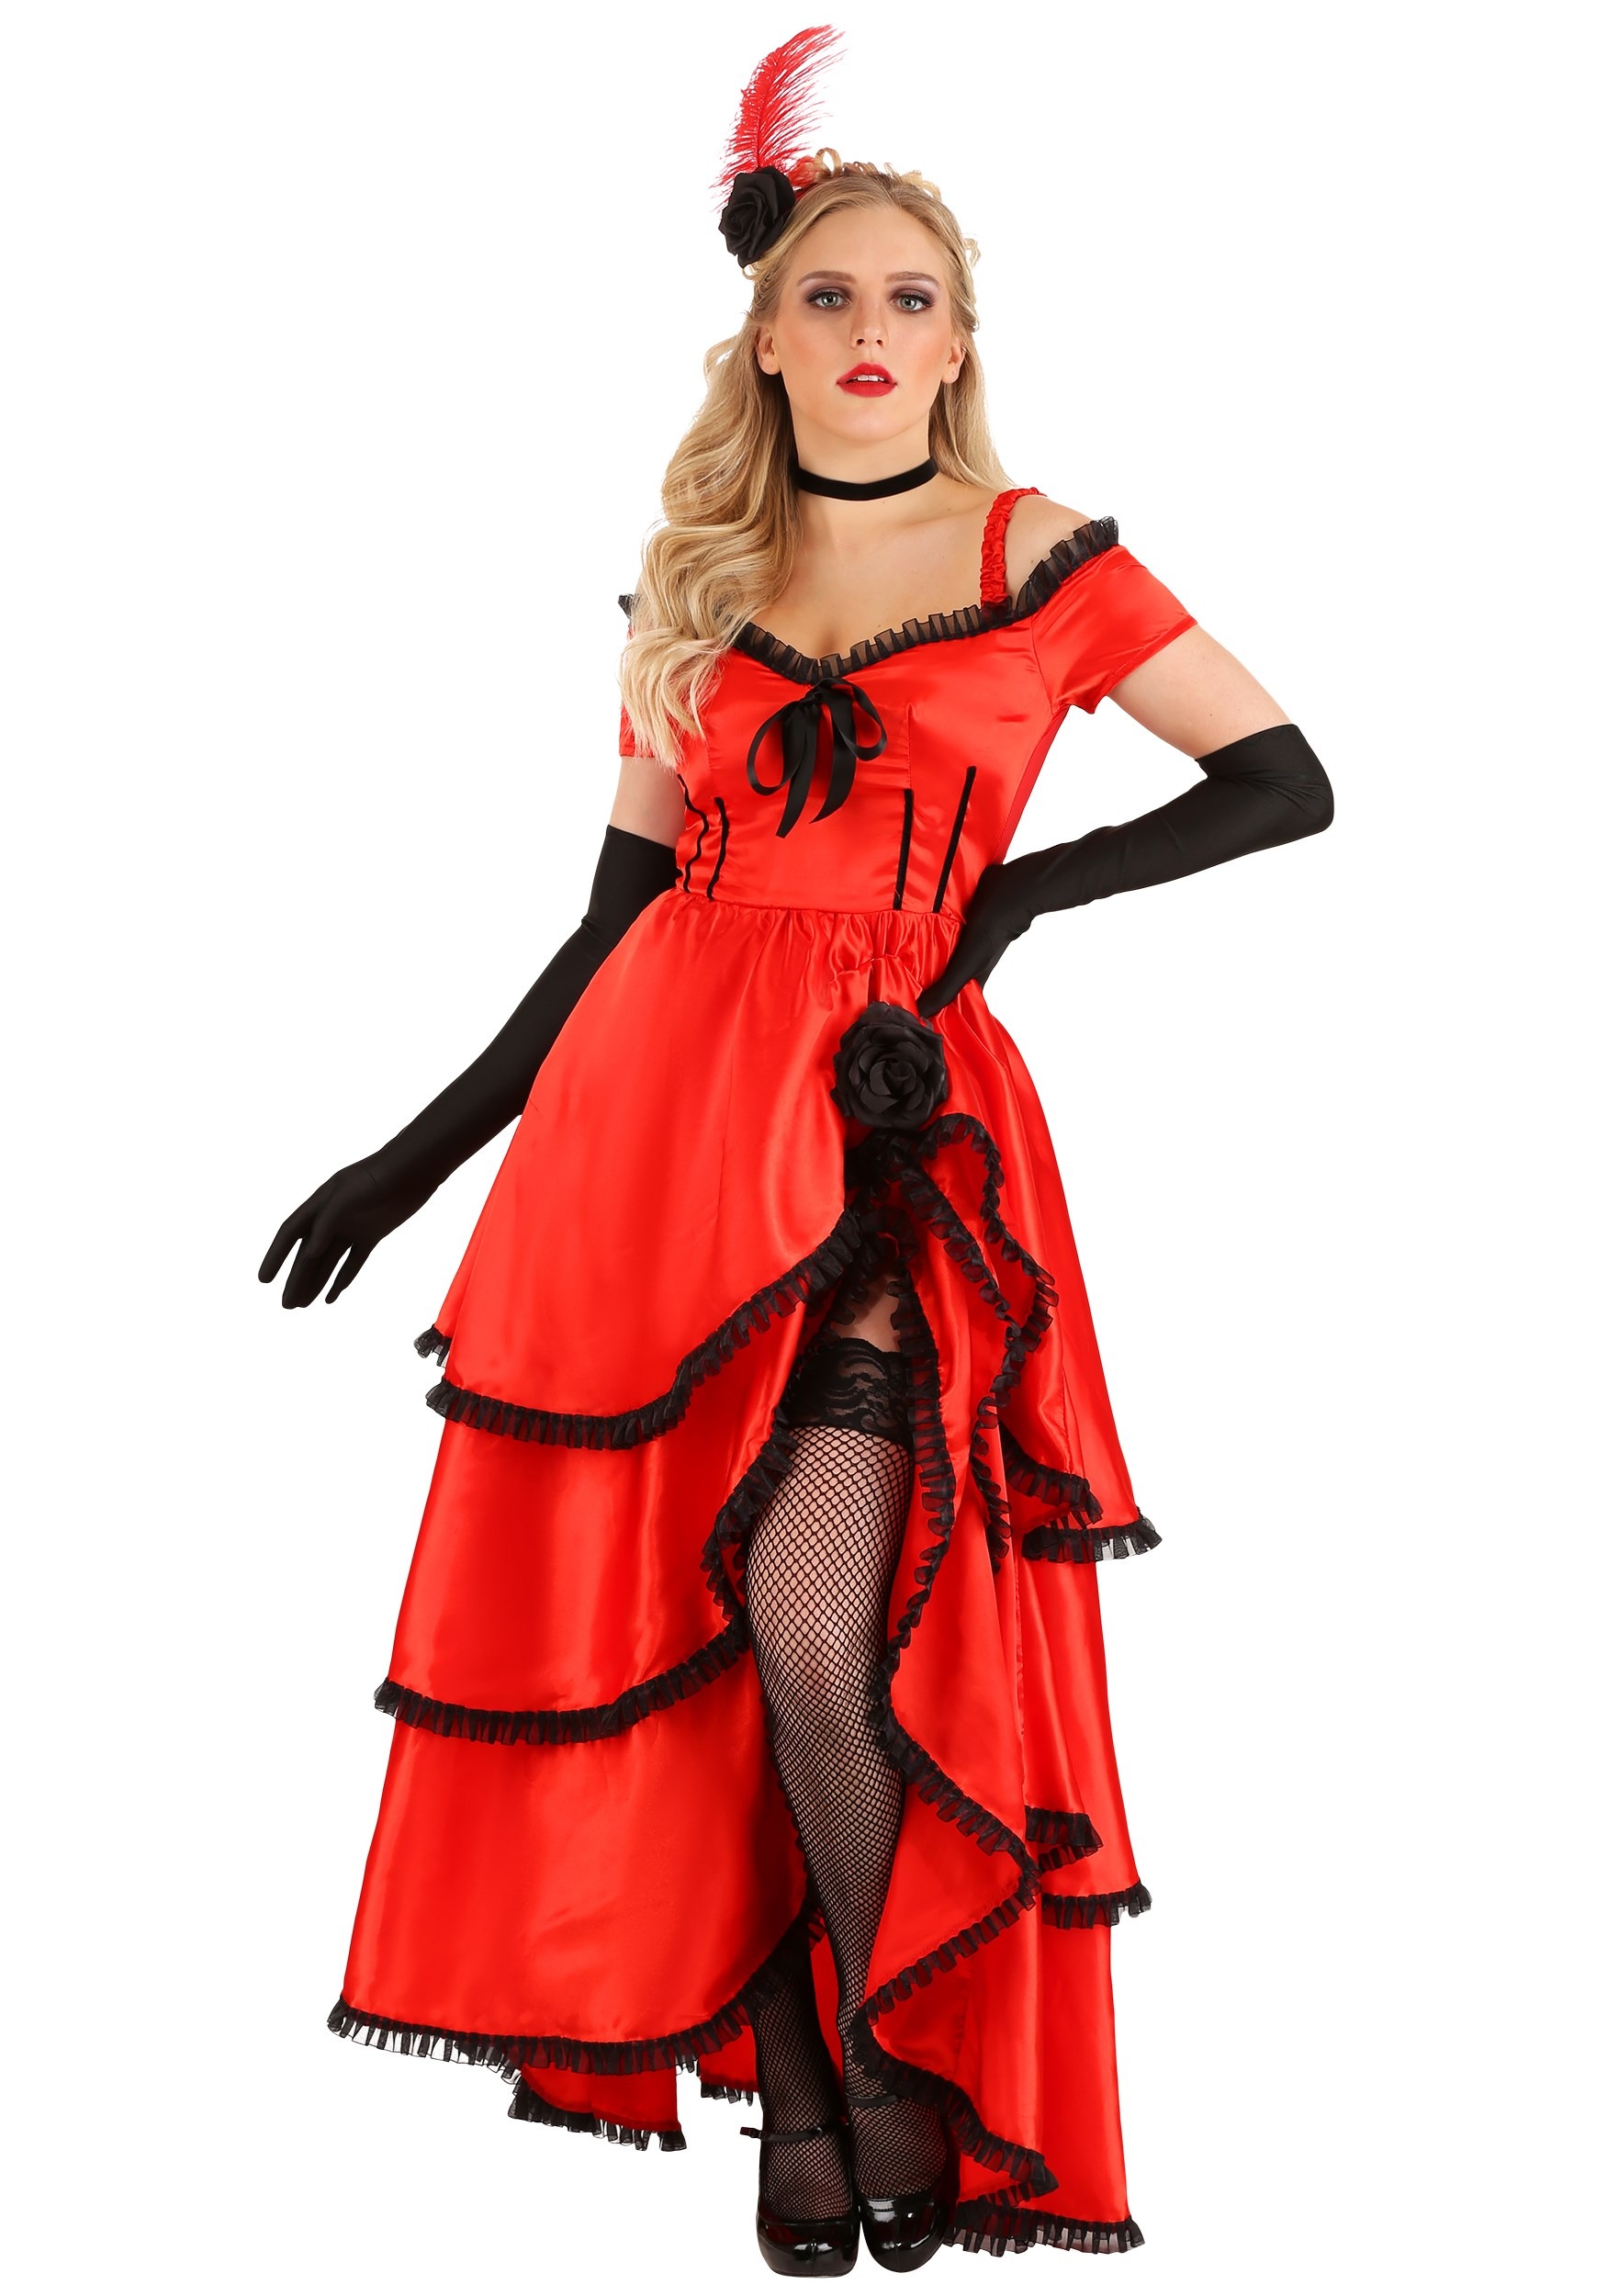 Sassy Showgirl Women's Fancy Dress Costume